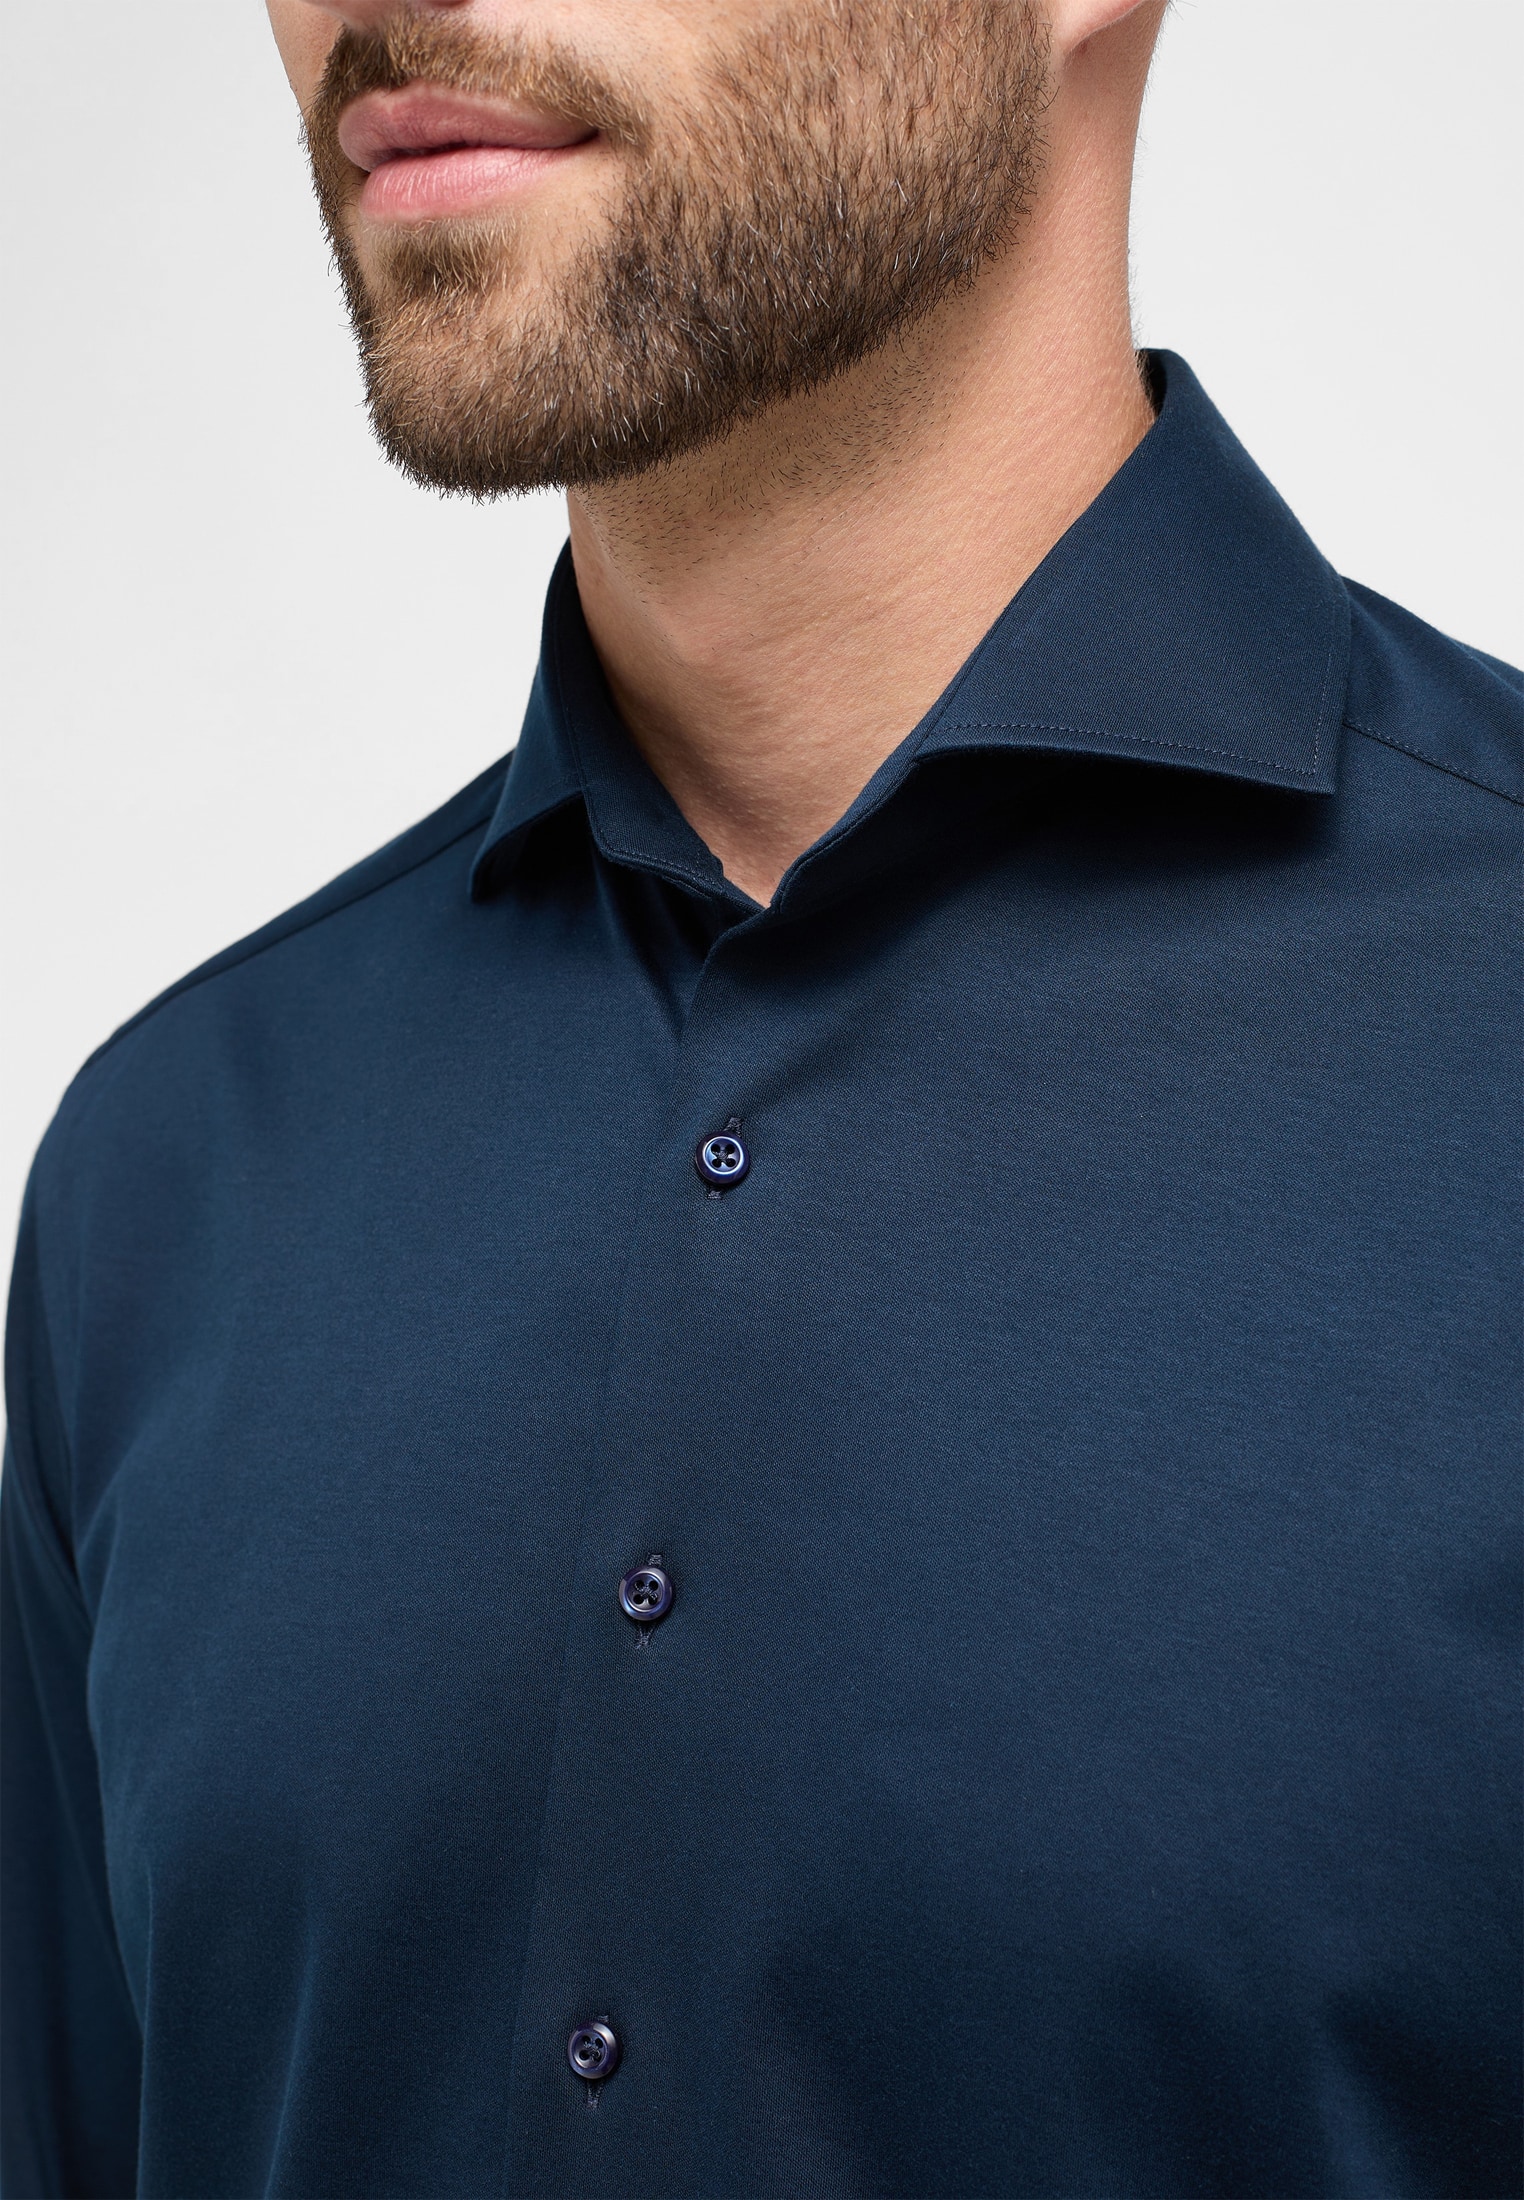 COMFORT FIT Jersey Shirt in dunkelblau unifarben | dunkelblau | 46 |  Langarm | 1SH00376-01-81-46-1/1